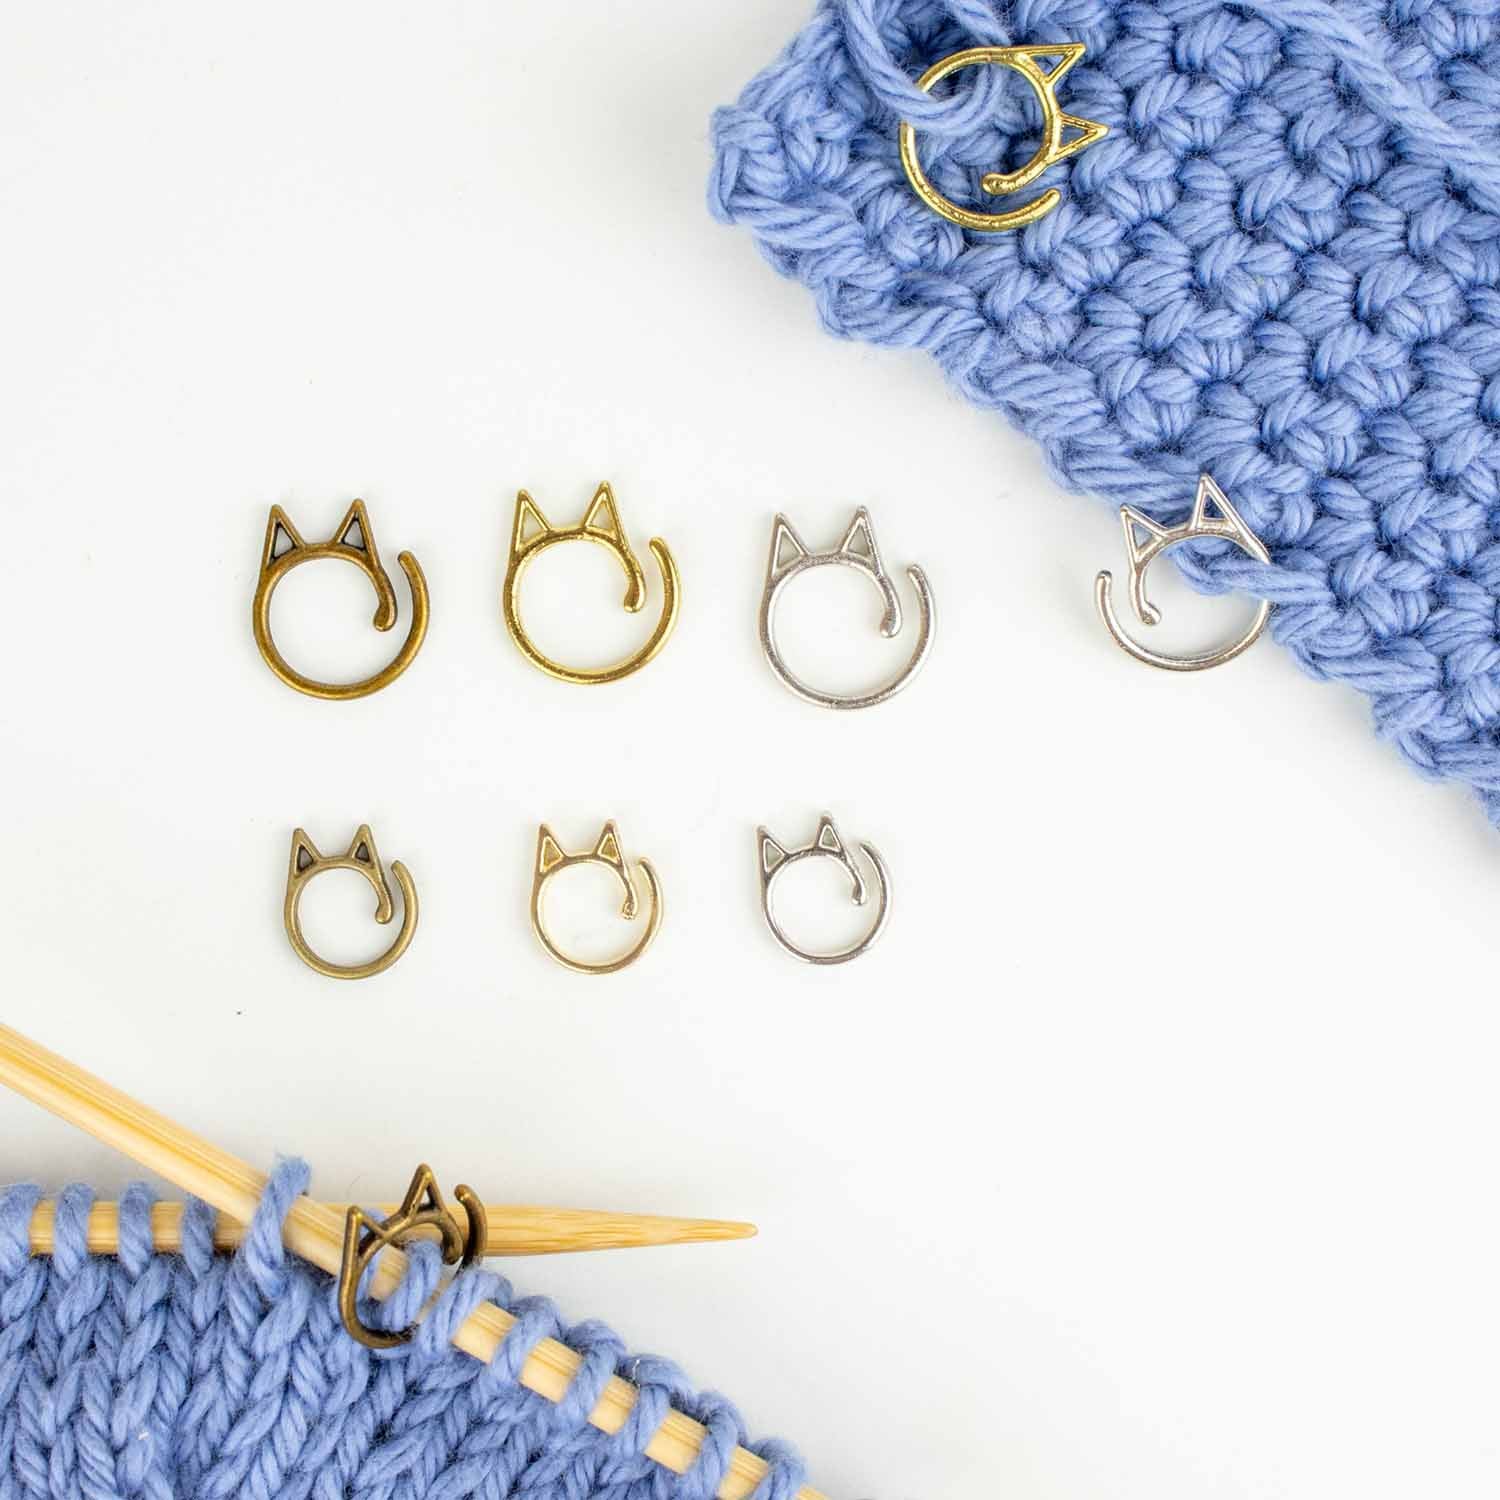 Amethyst Knitting or Crochet Stitch Markers - Twice Sheared Sheep